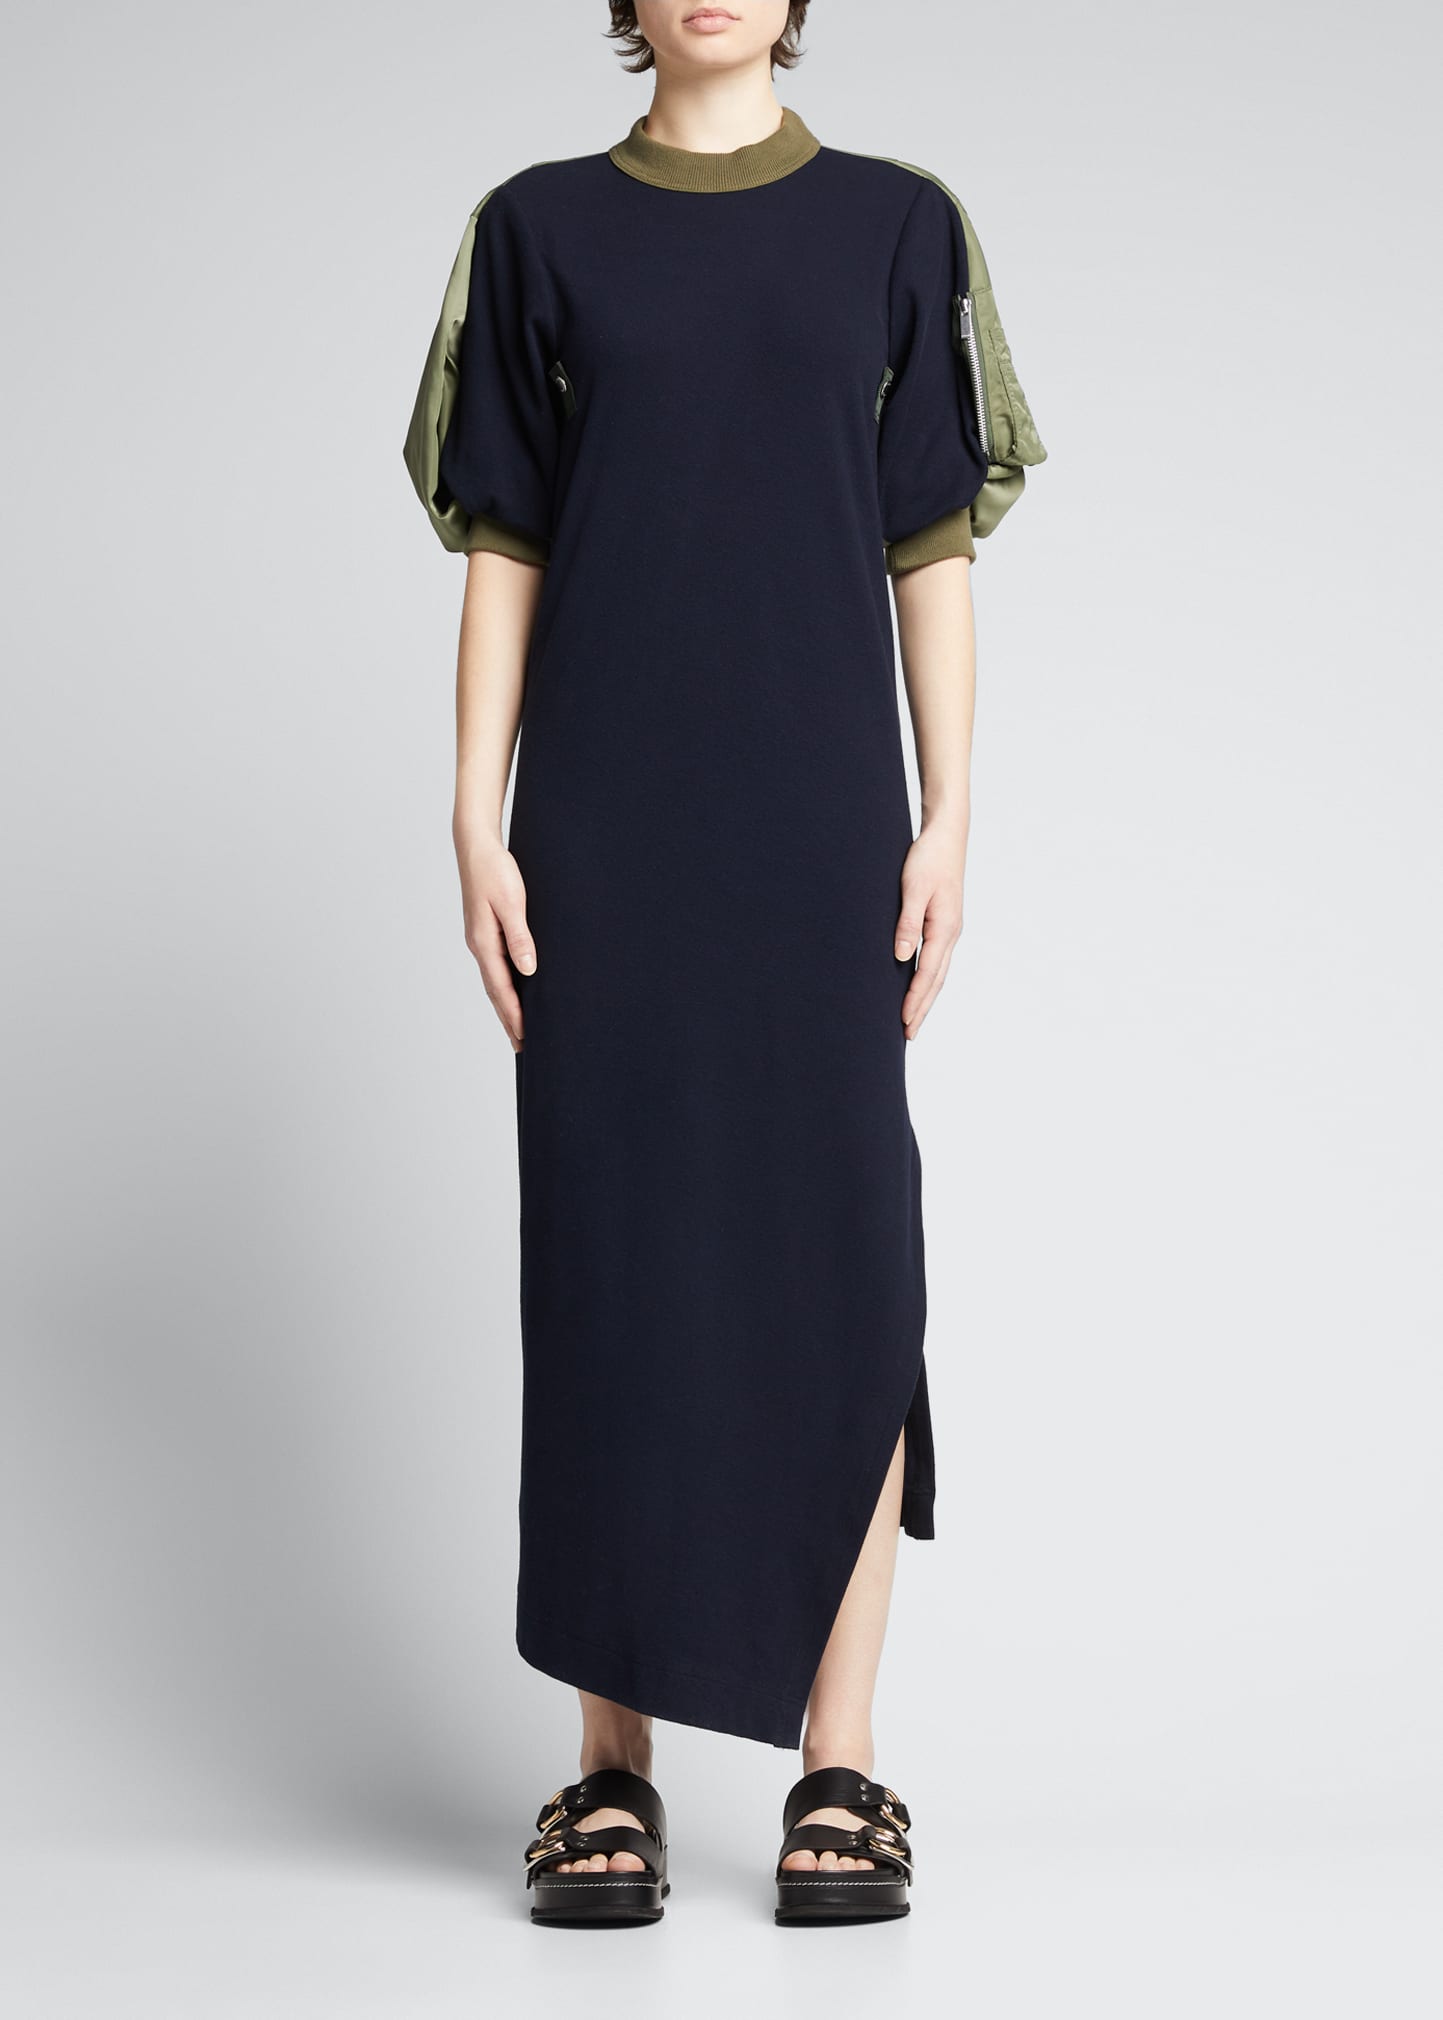 Asymmetric Jersey Dress | bergdorfgoodman.com